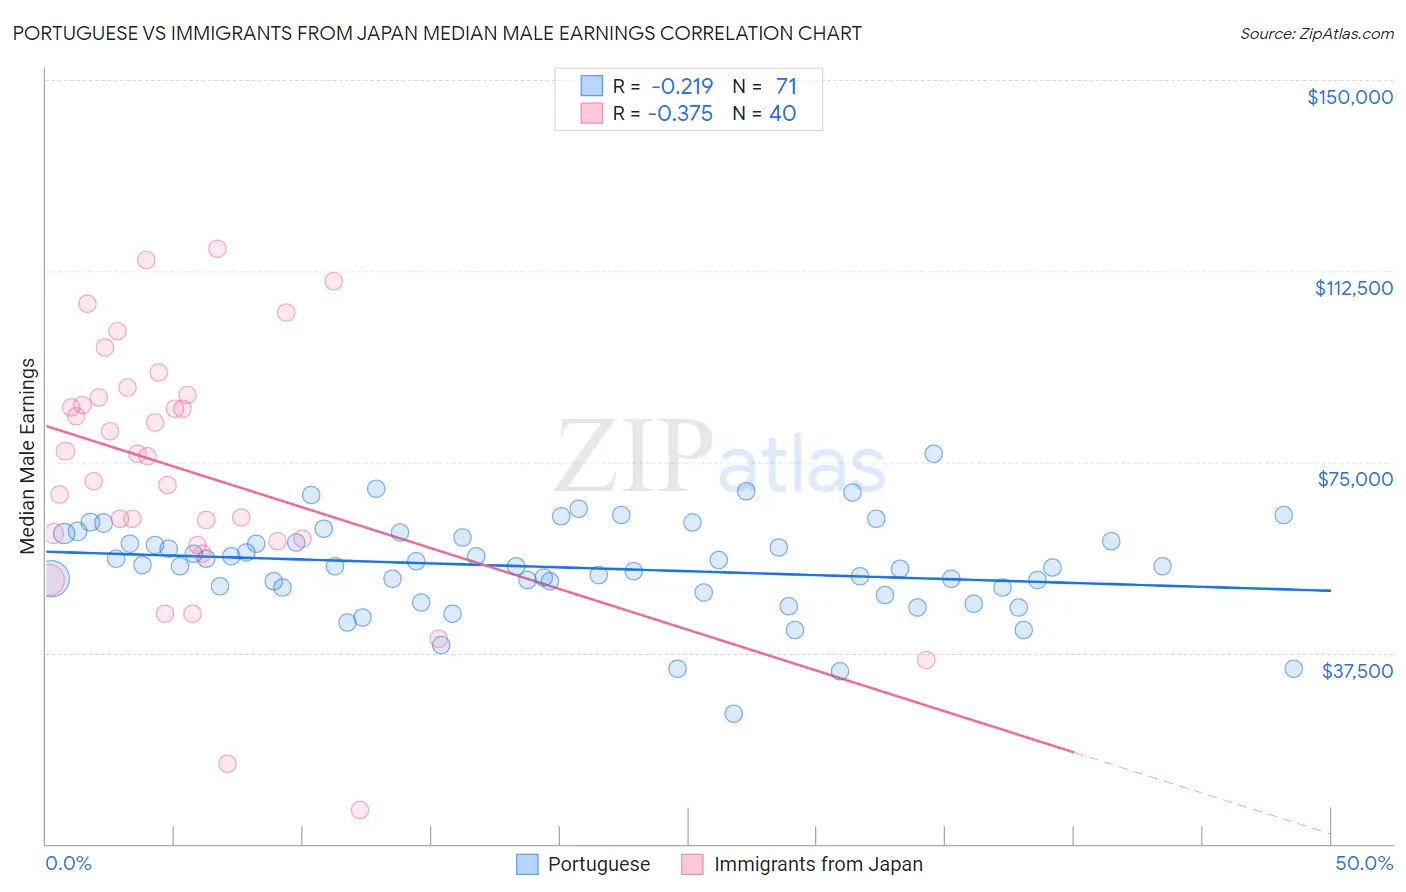 Portuguese vs Immigrants from Japan Median Male Earnings